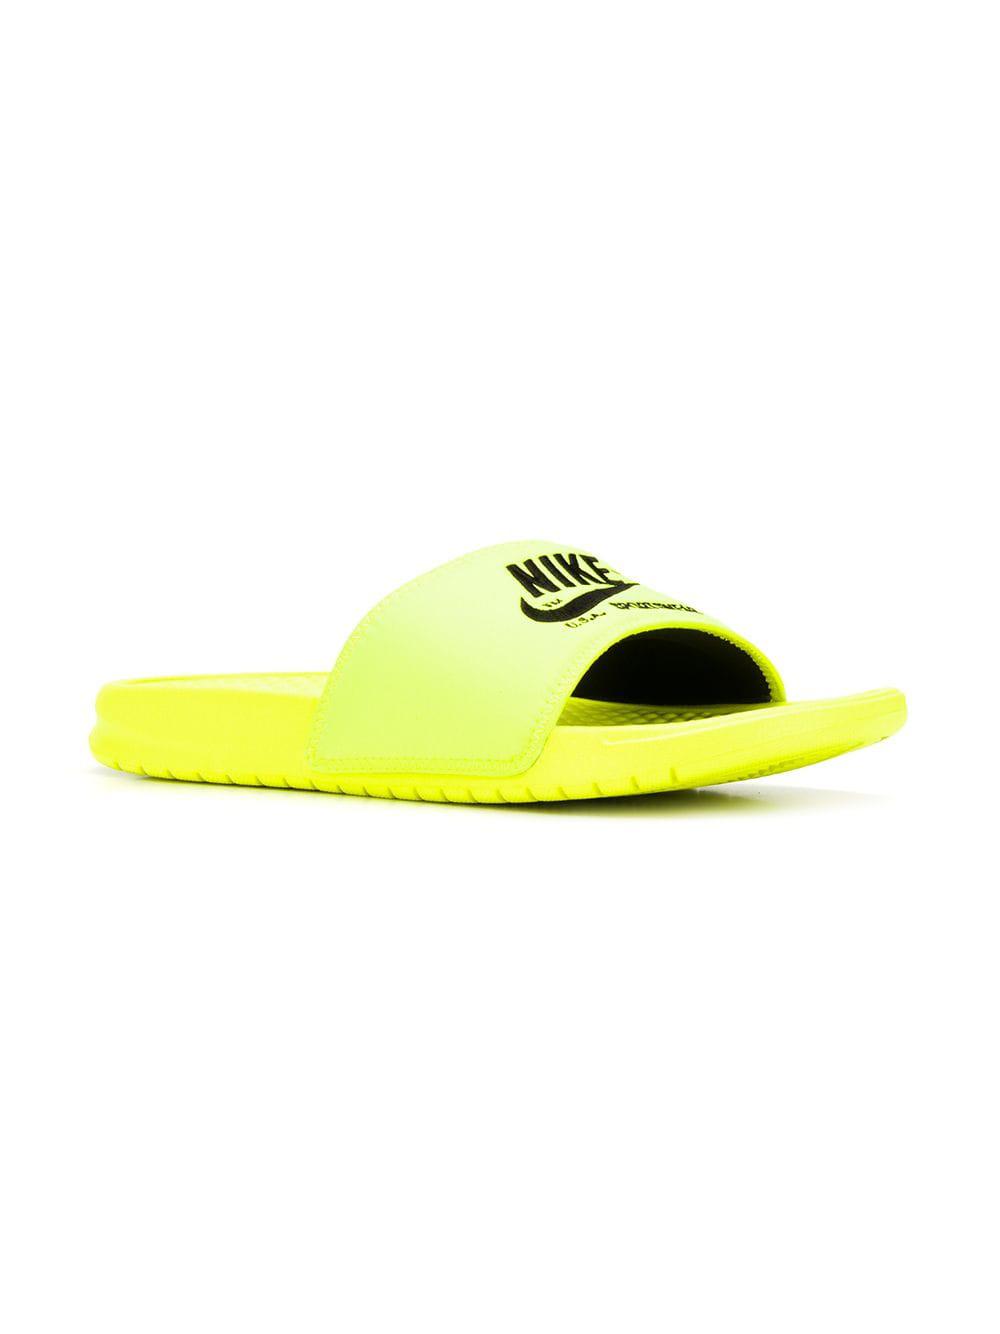 Nike Benassi Slide Sandals in Yellow 